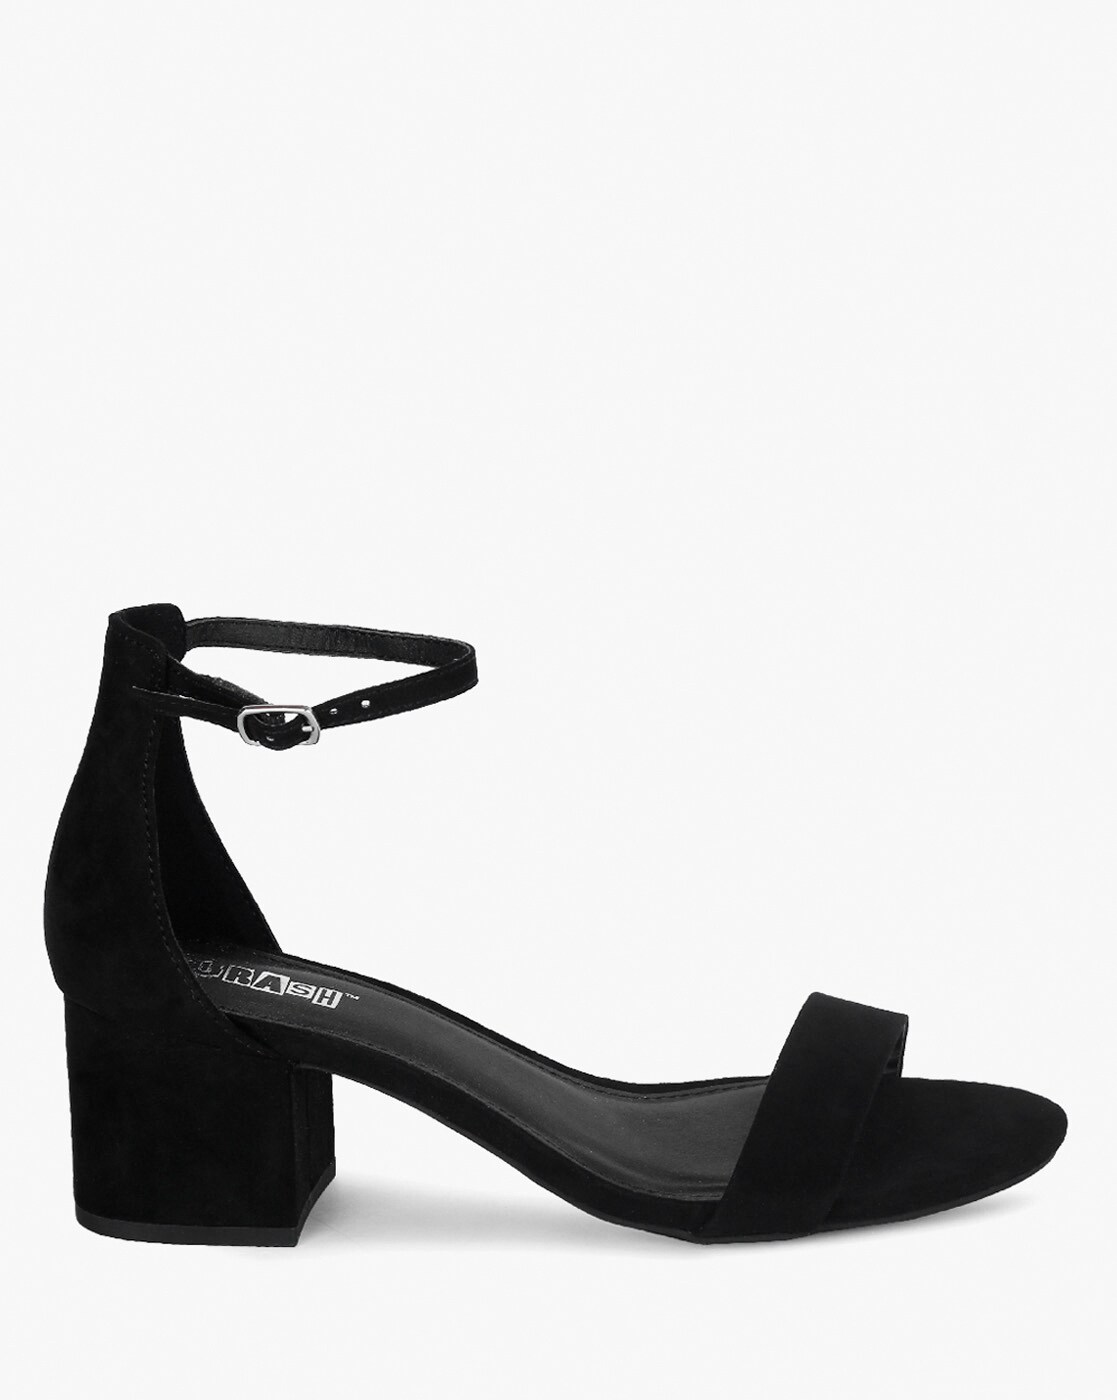 Brash Women's Black Gold Studded Khaotic Platform Stiletto Heels Size 7.5 |  eBay